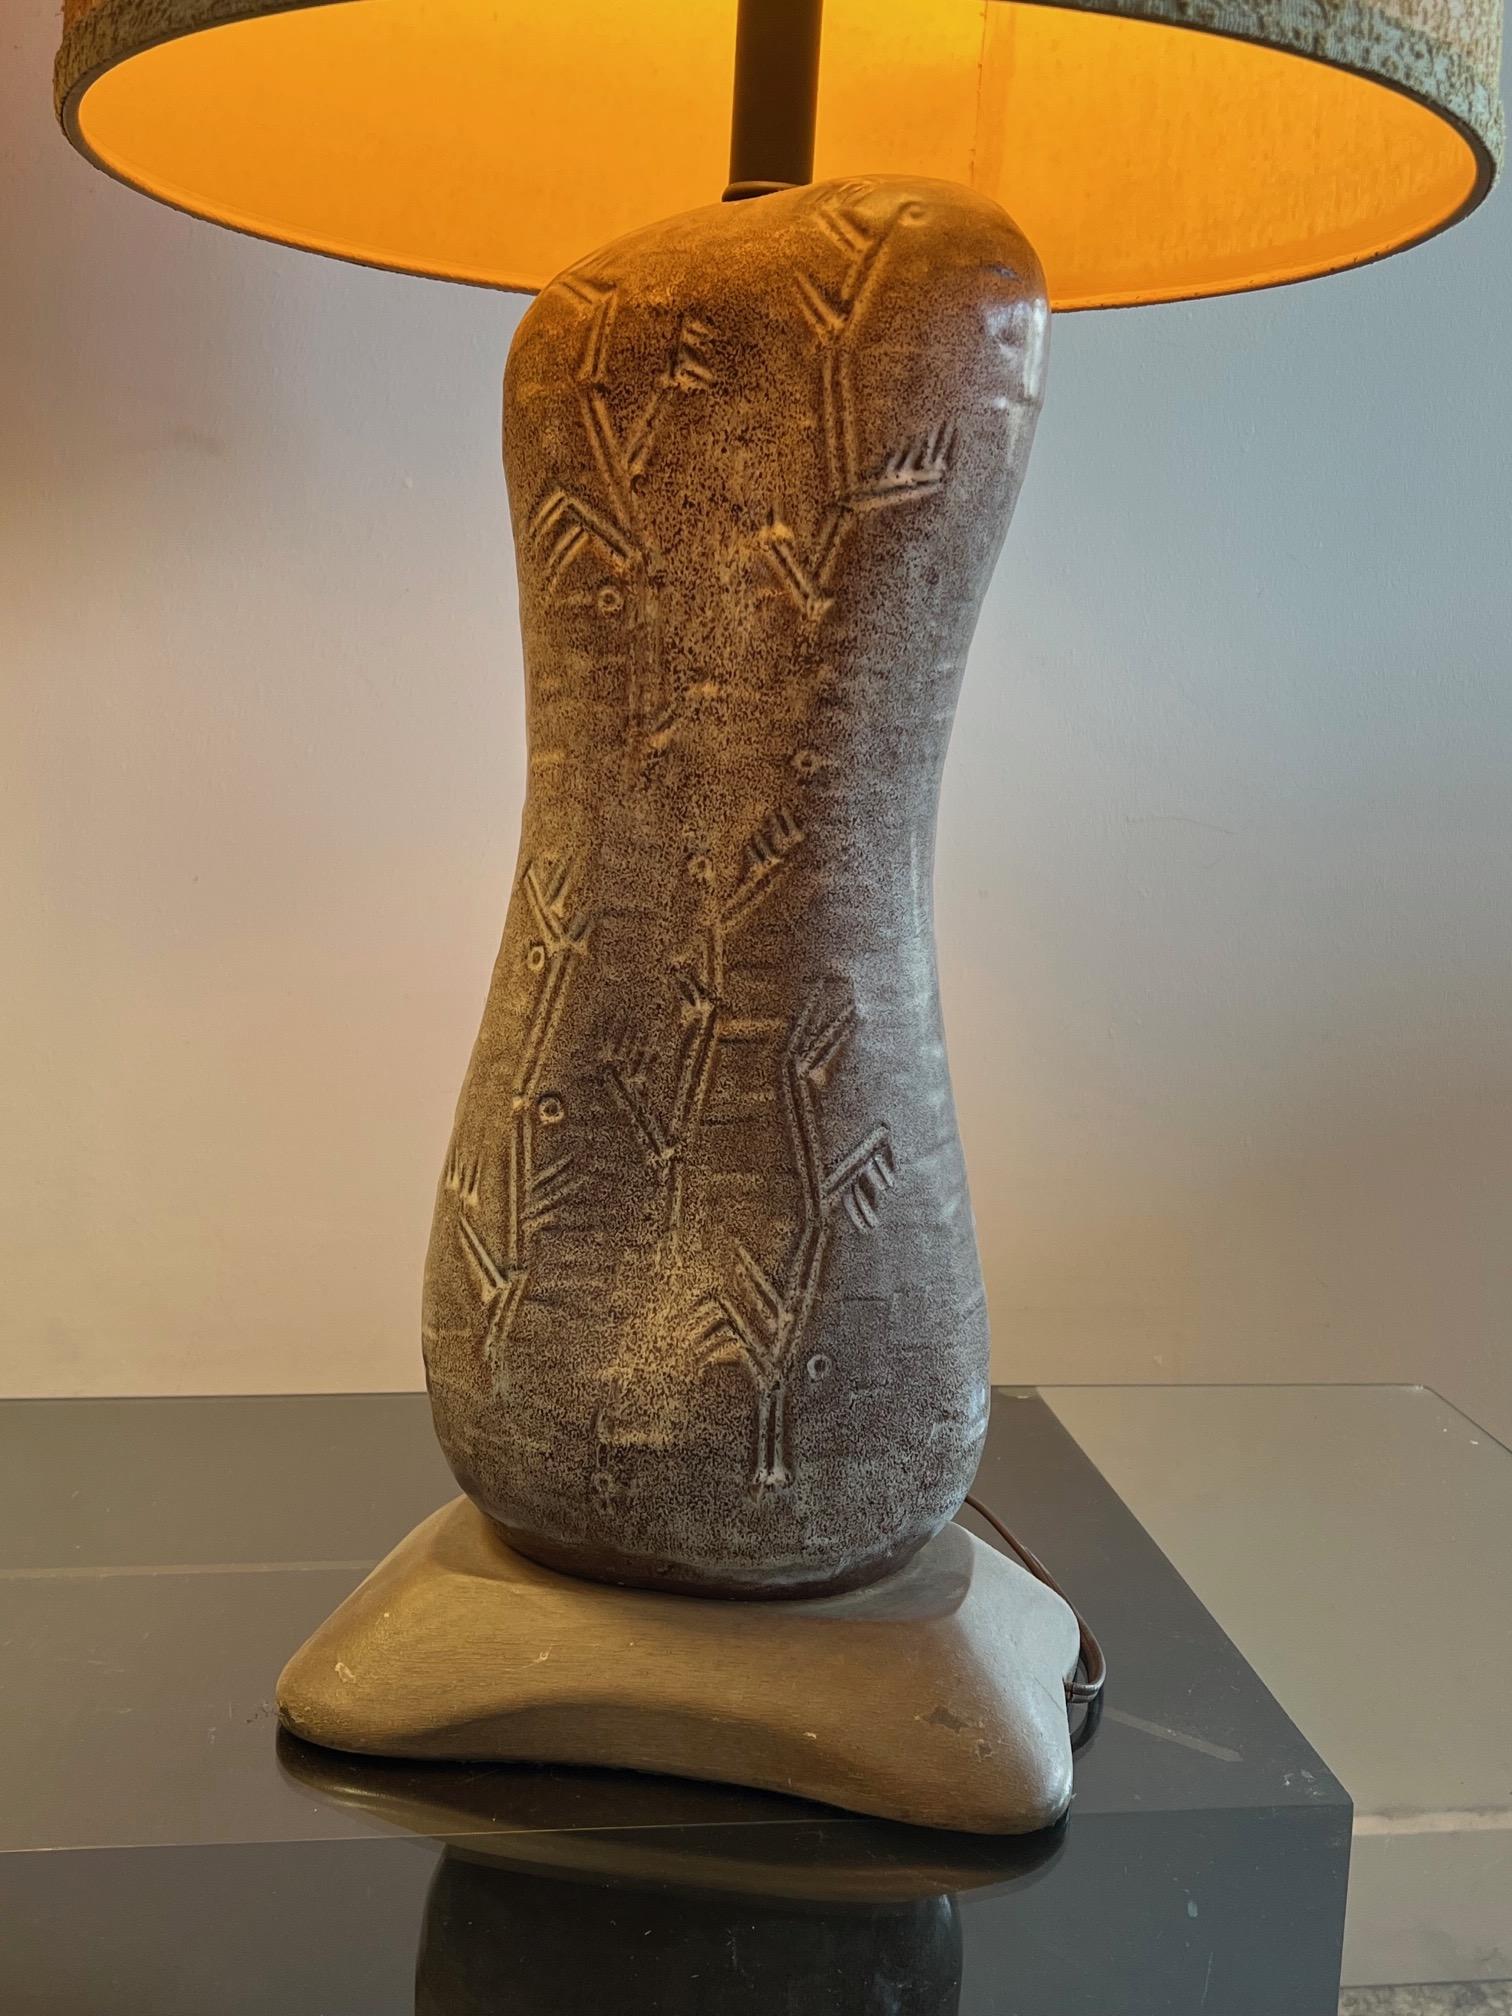 unusual lamps